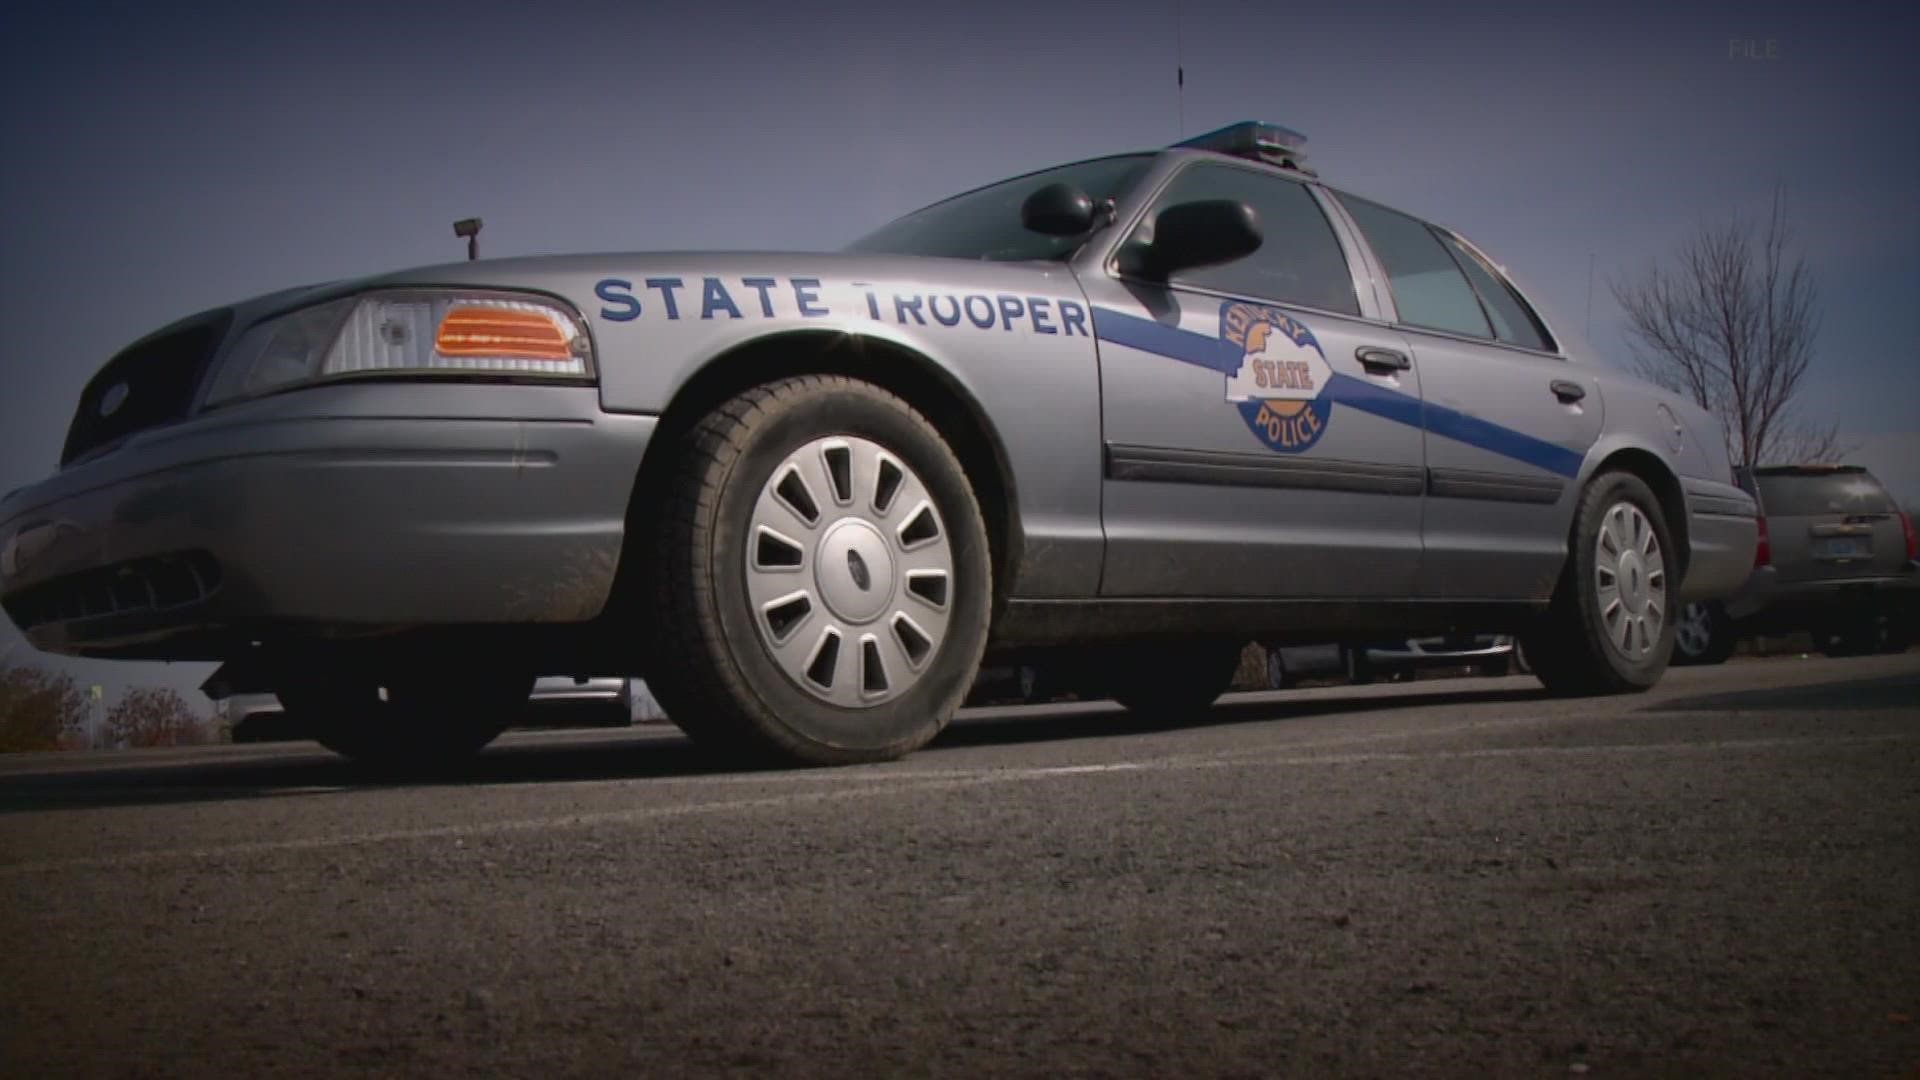 Kentucky State Police receive 'Best Looking Cruiser' win